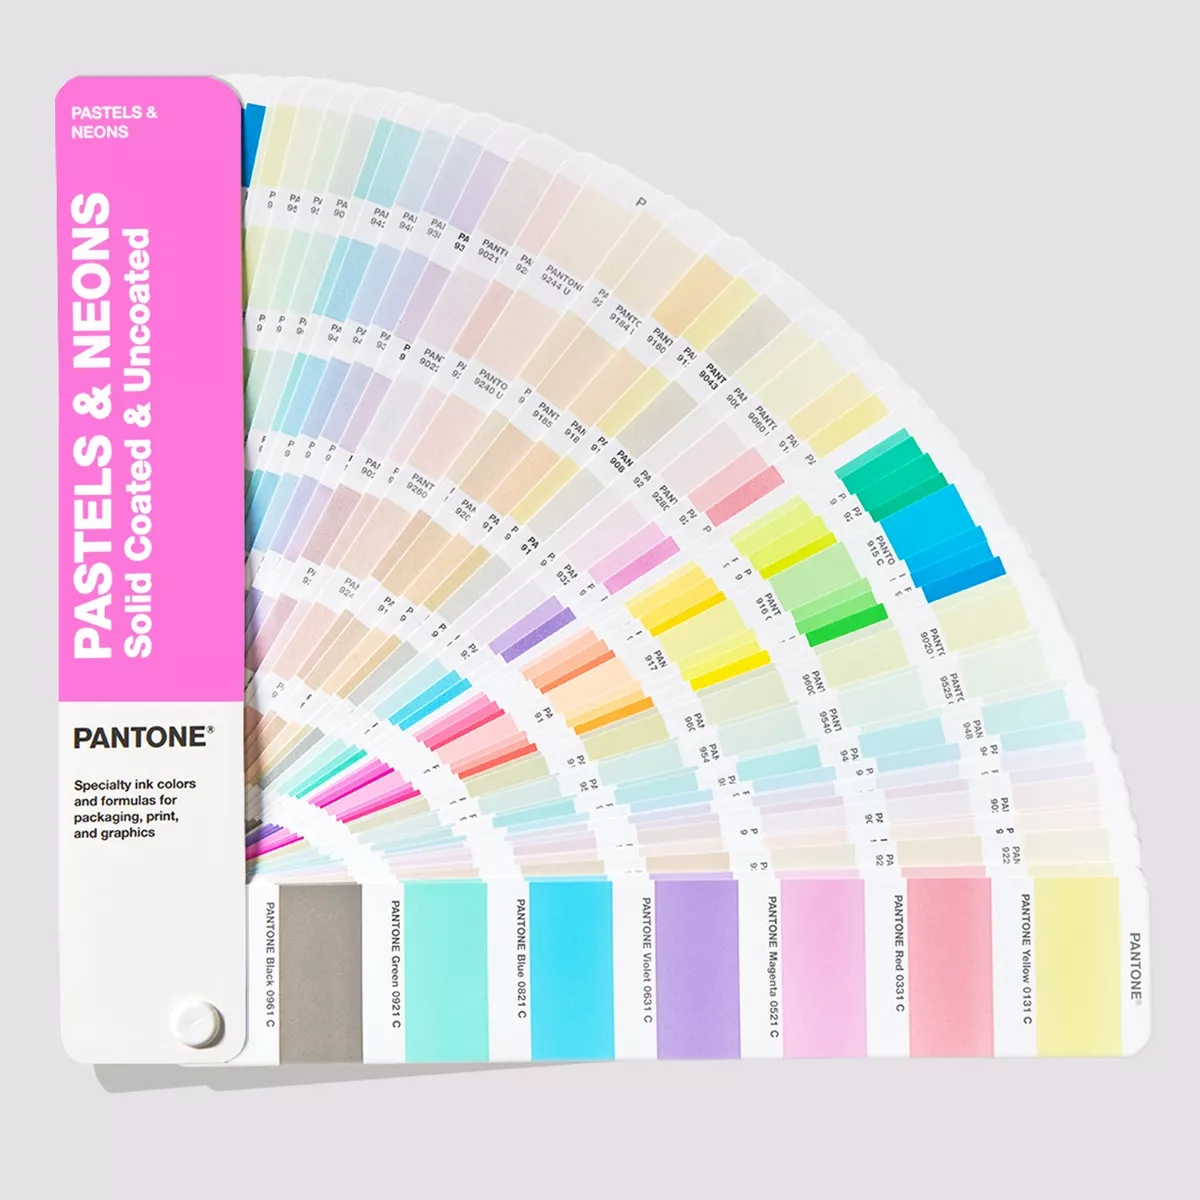 Controlul culorii / Pantone - PANTONE Pastels & Neons Guide Coated & Uncoated, transilvae.ro